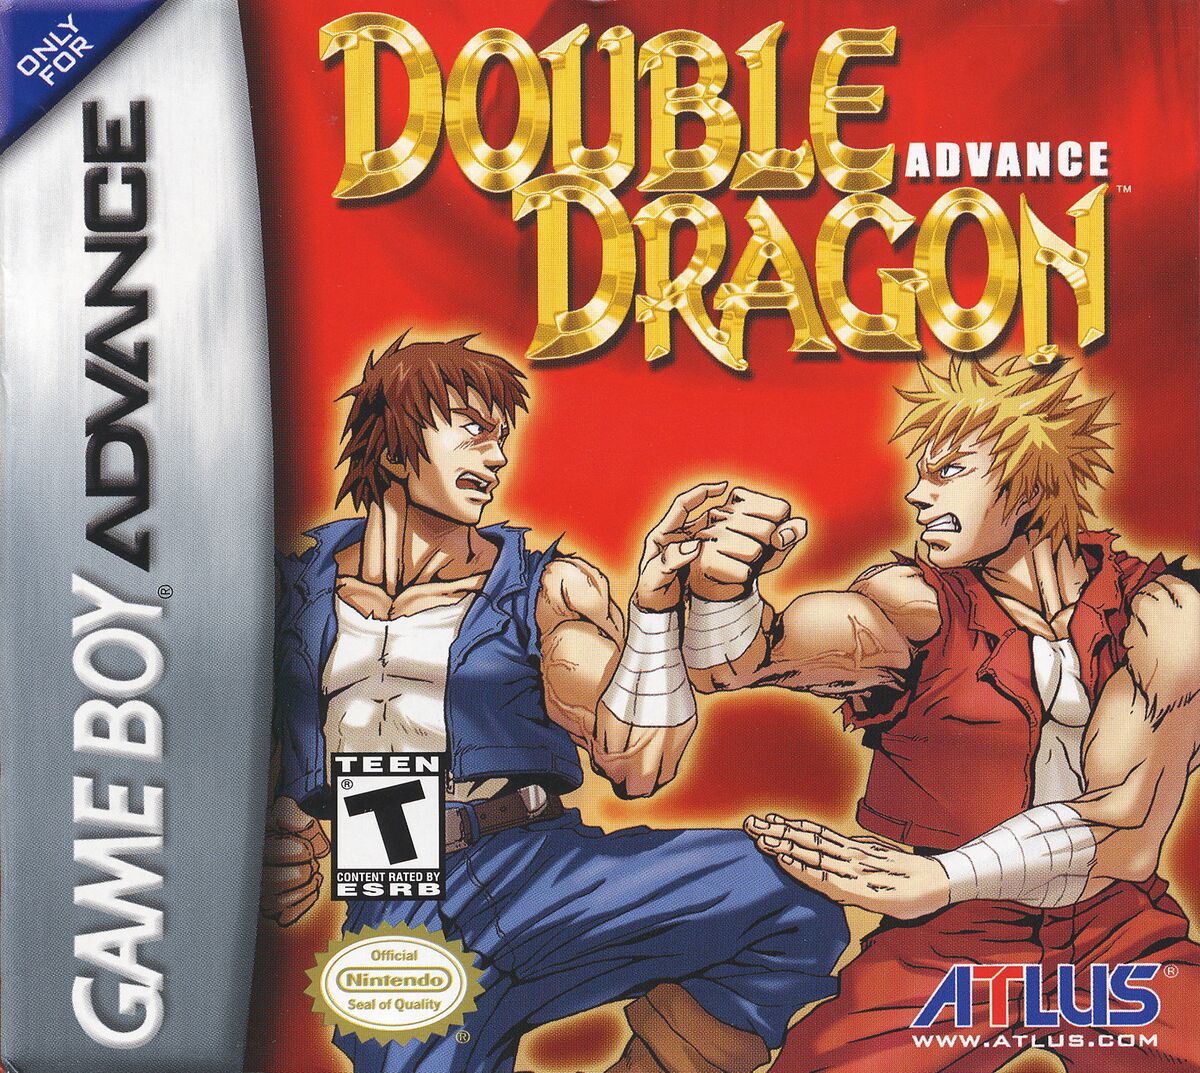 Double Dragon V: The Shadow Falls - Wikipedia